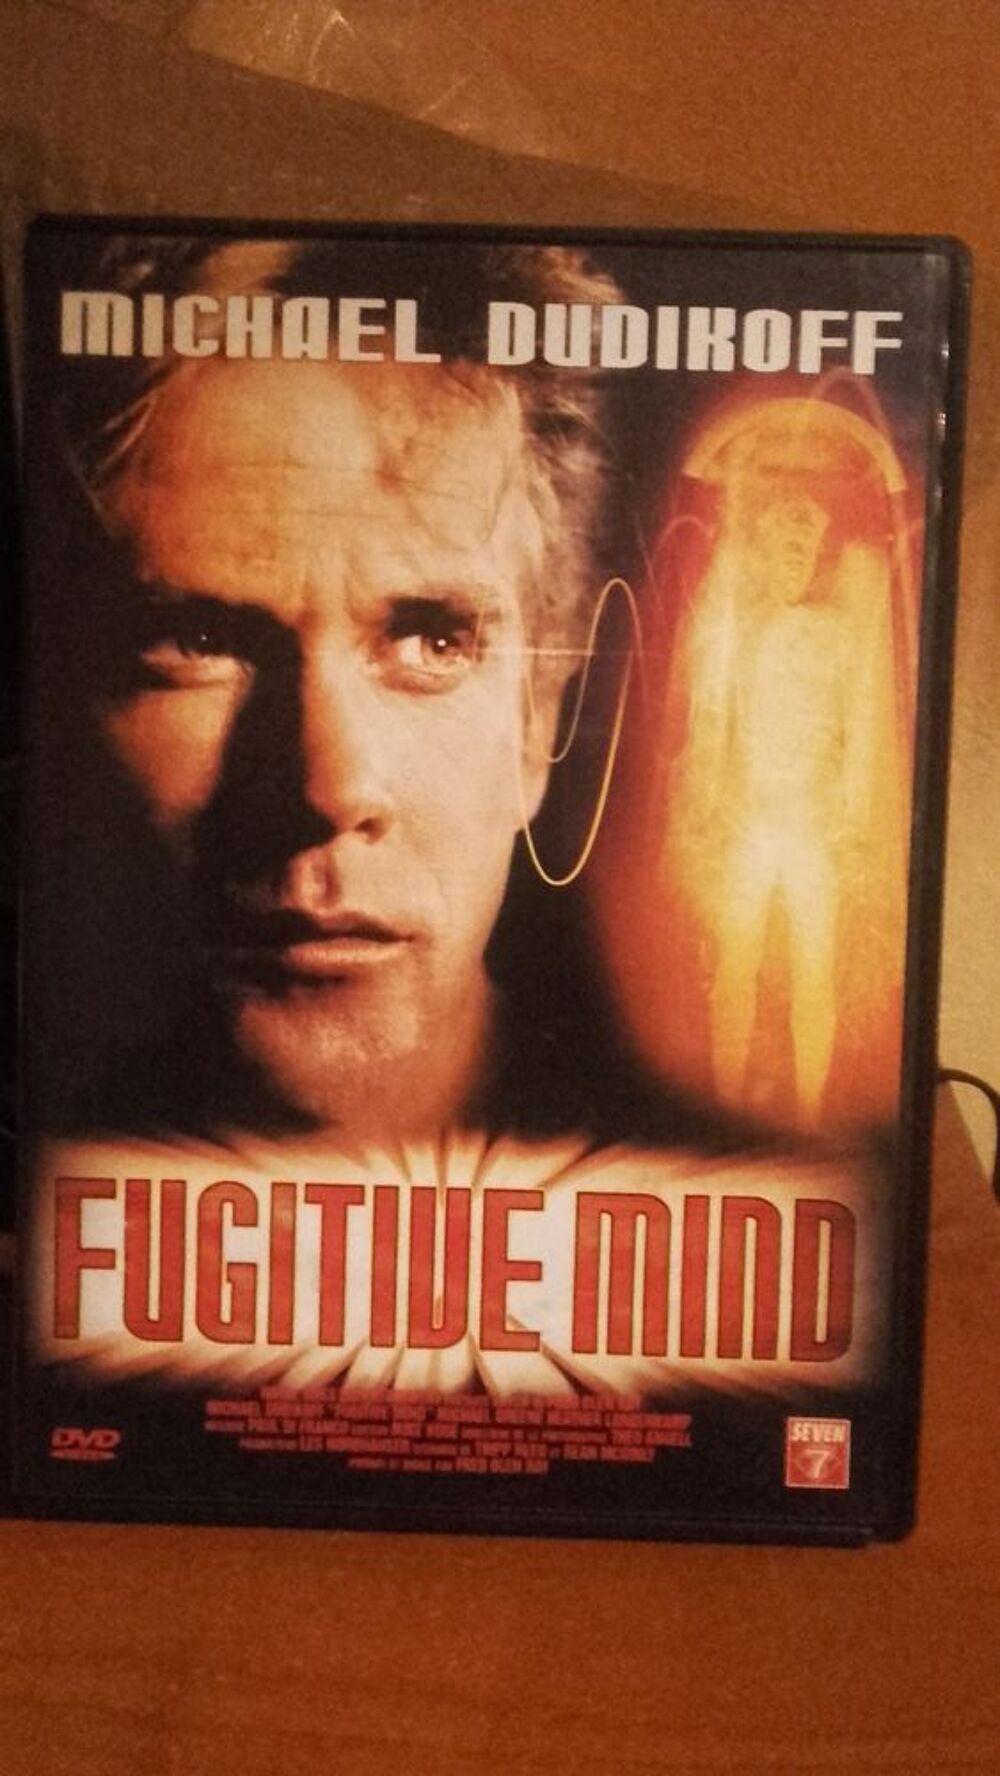 DVD 
Ring of steel.
Fugitive mind DVD et blu-ray